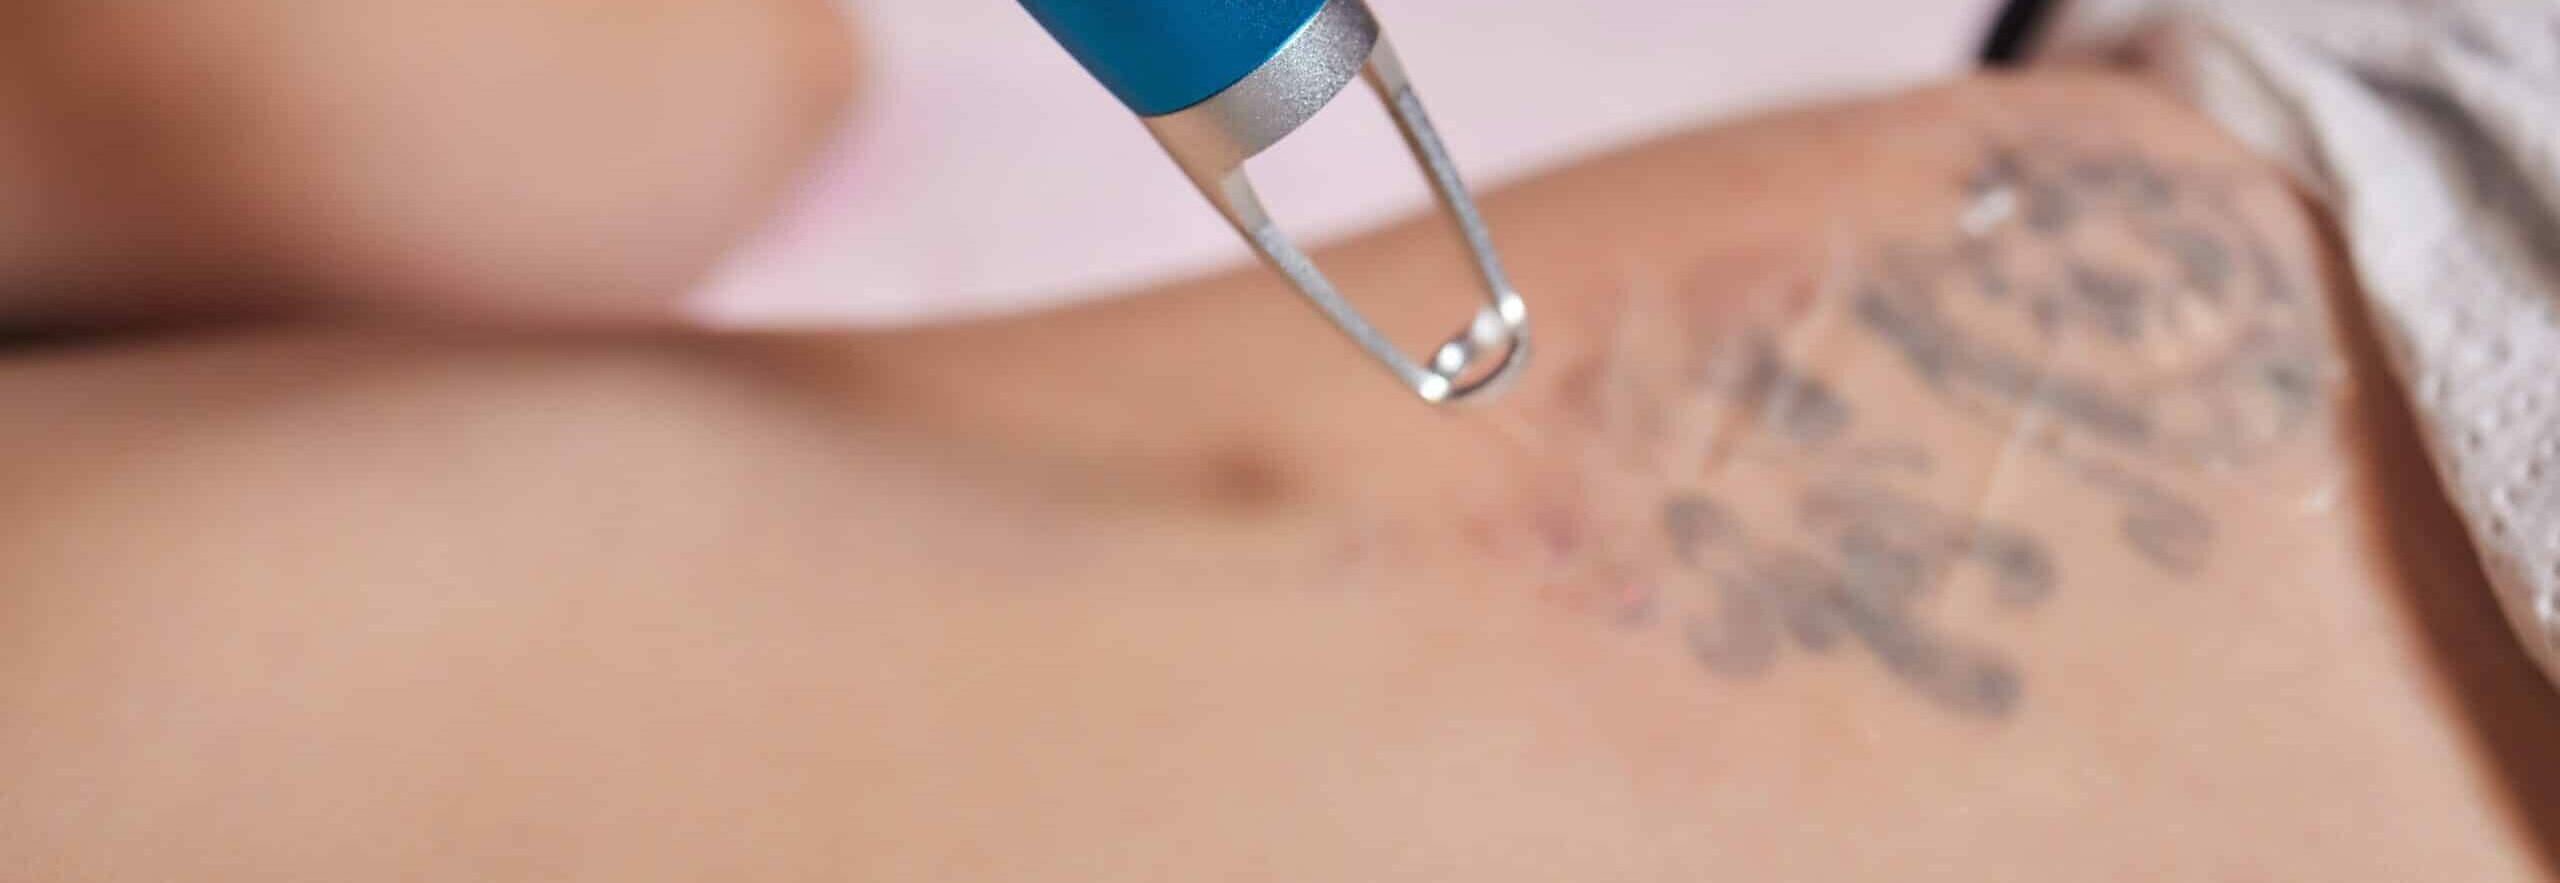 pico laser om tatoeage te verwijderen